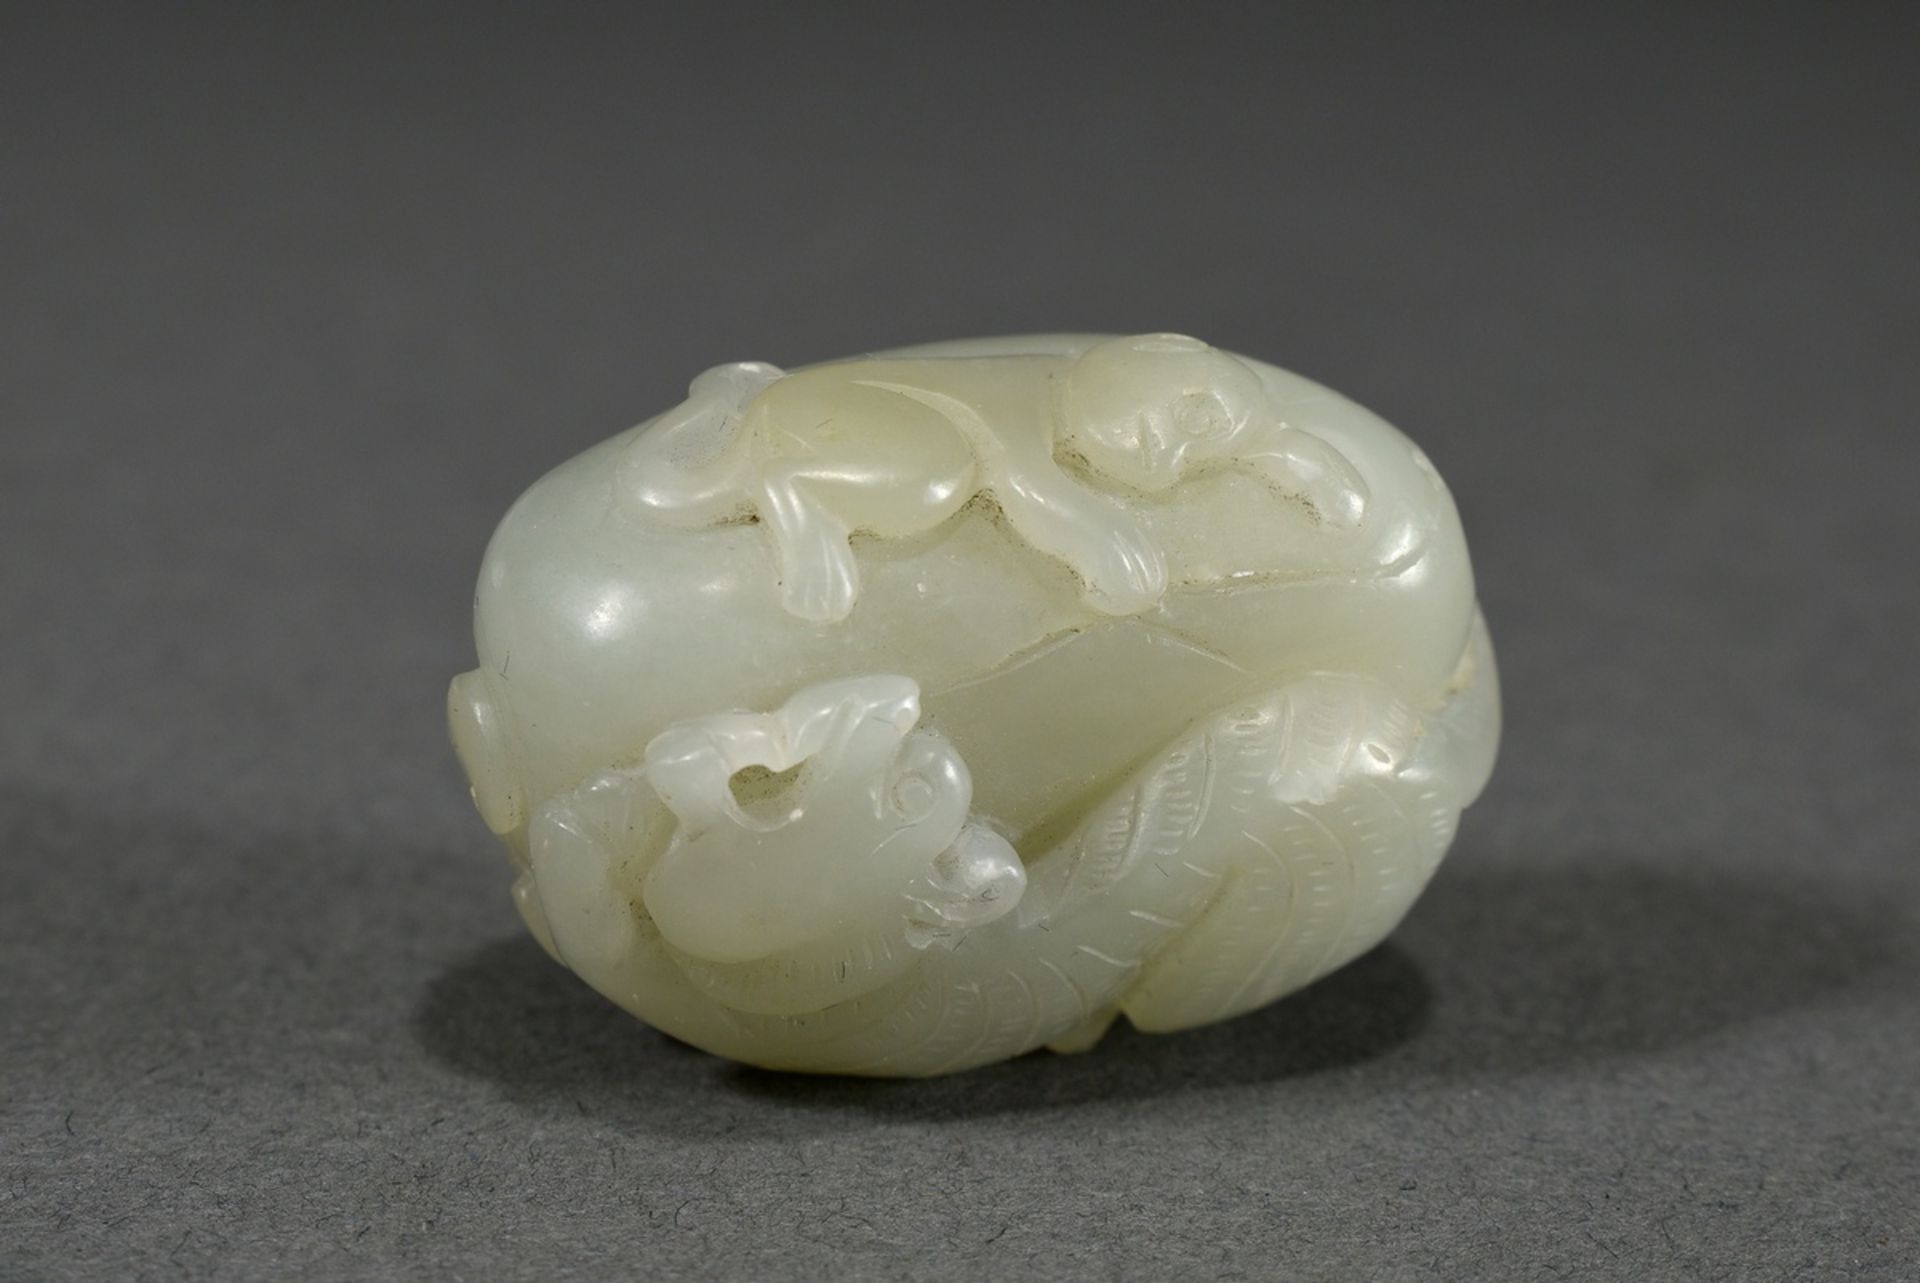 Fine celadon jade toggle "Tiger and monkey on rocks", China, 3.7x2.5x1.9cm